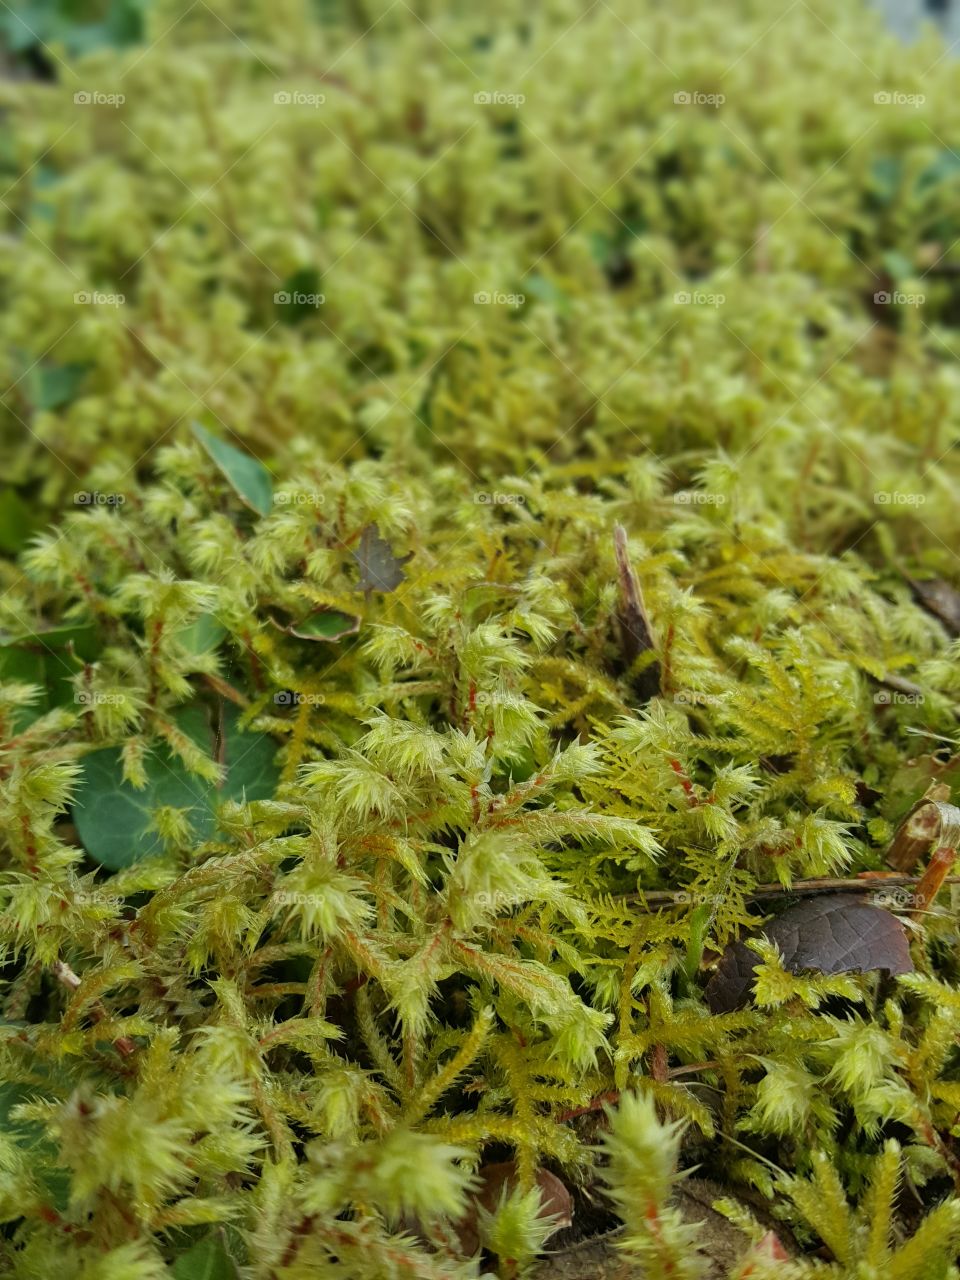 The moss mini world